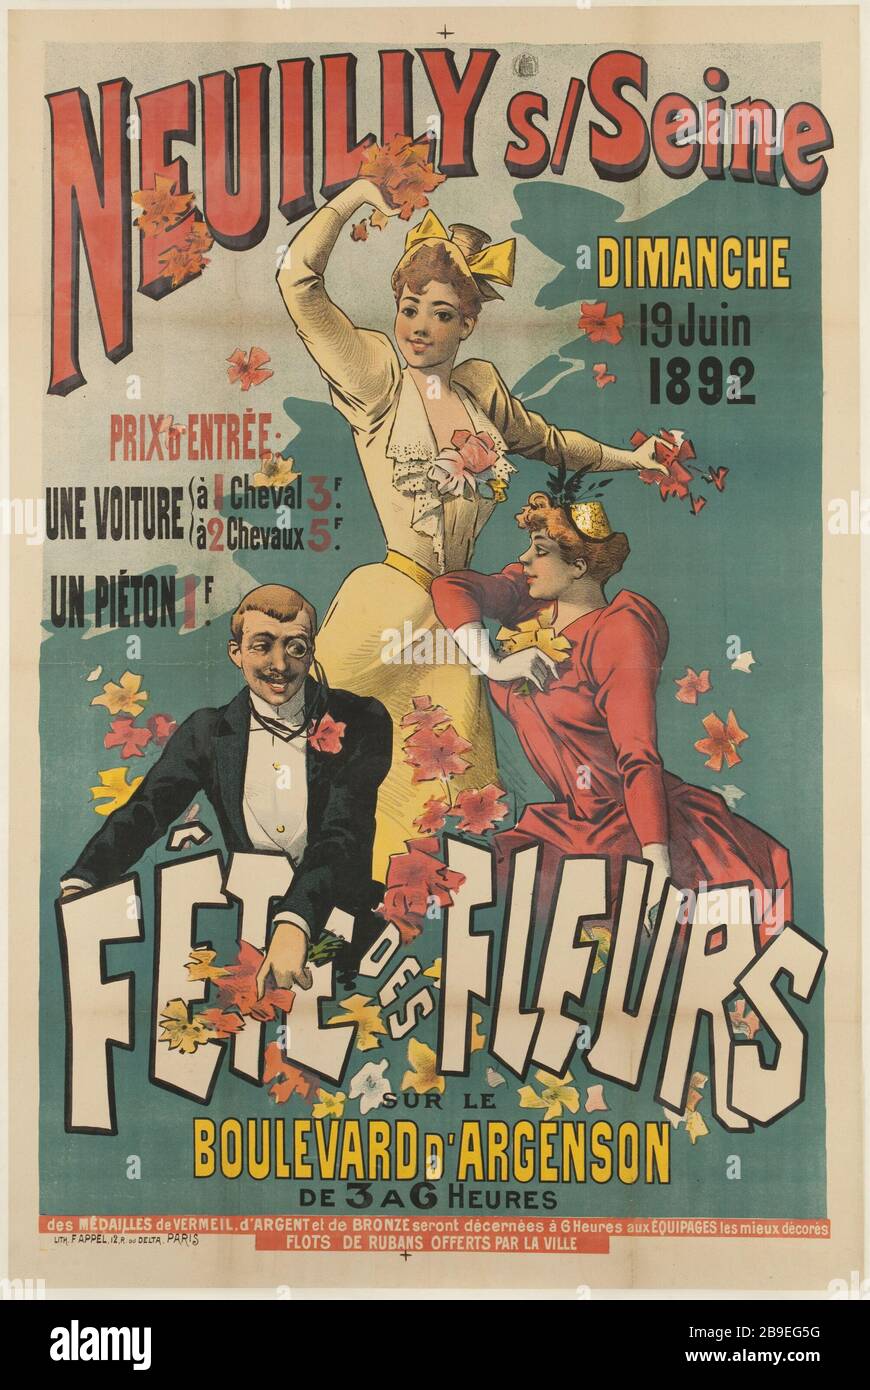 NEUILLY S / SEINE FESTIVAL OF FLOWERS Anonyme. 'Neuilly-sur-Seine, Fête des fleurs'. Lithographie. 1892. Paris, musée Carnavalet. Stock Photo